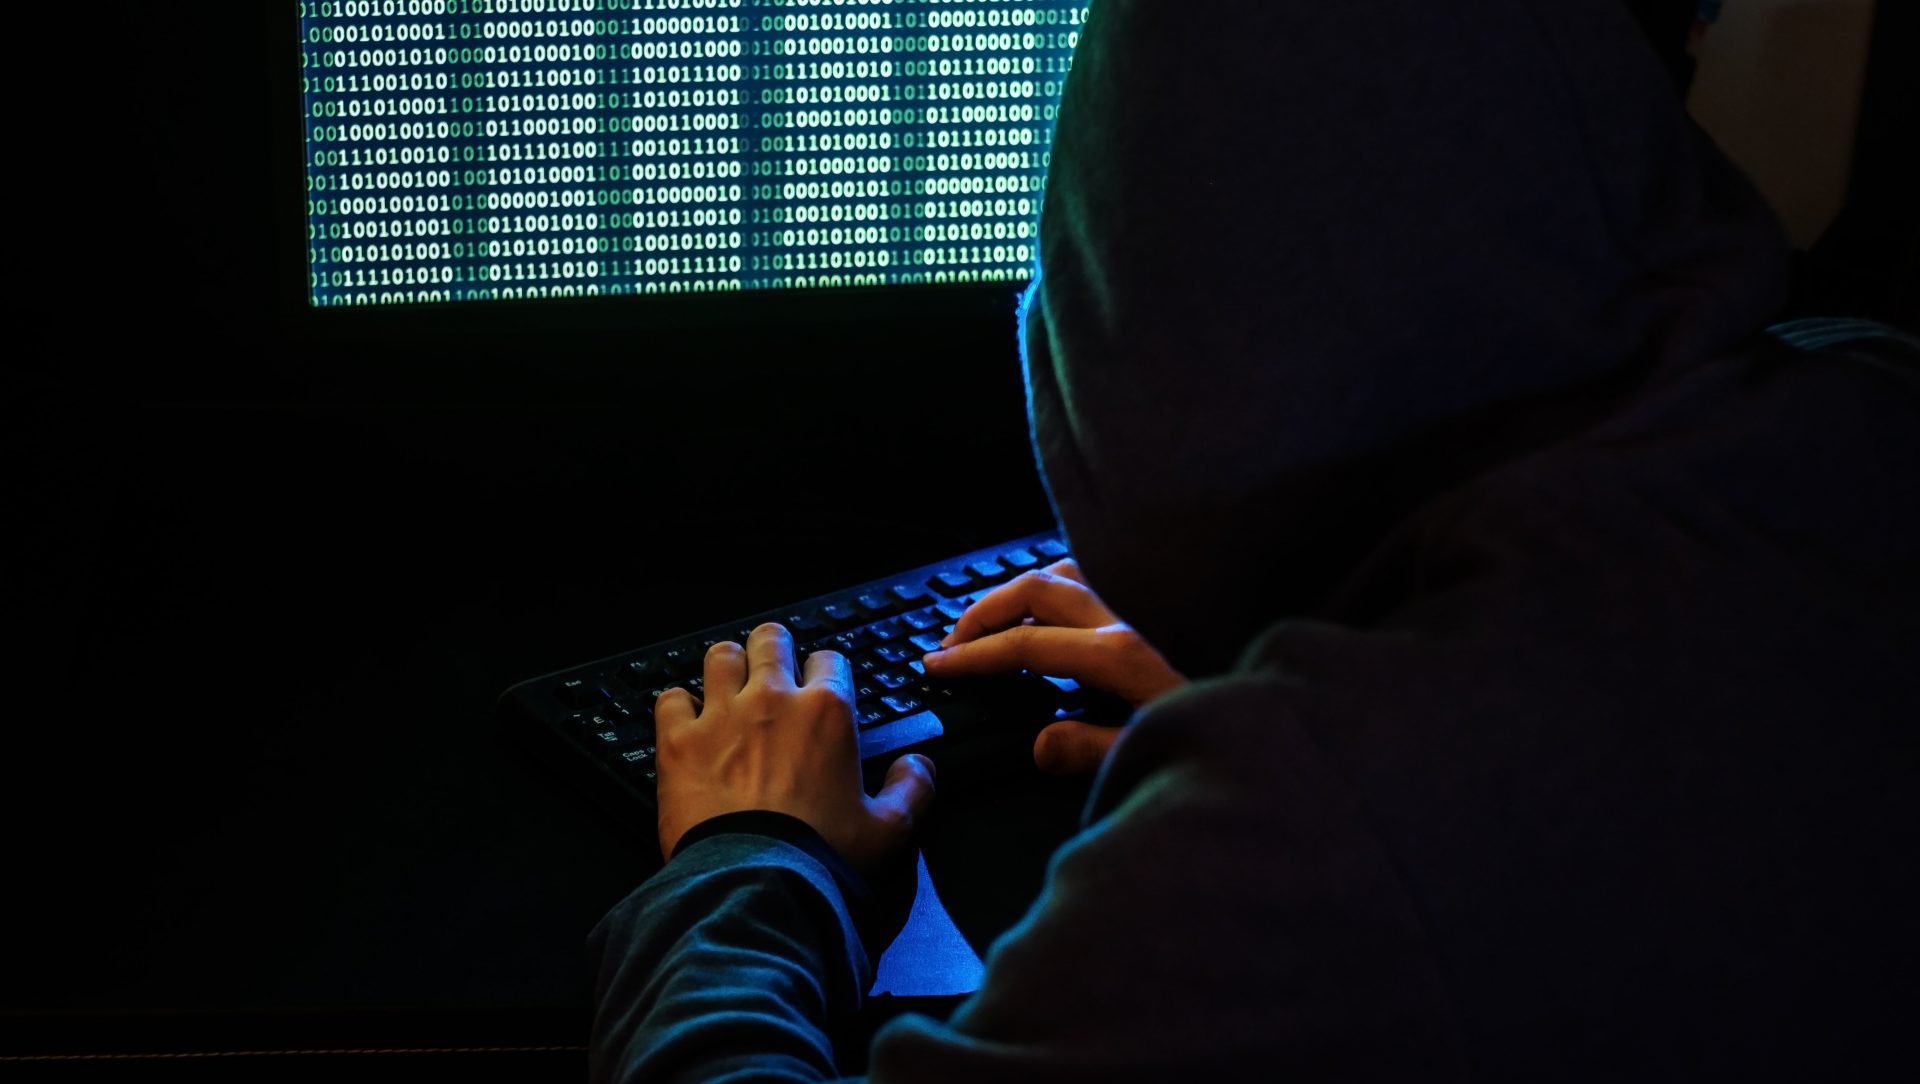 cybercrime-through-the-internet-PULKSL9-min